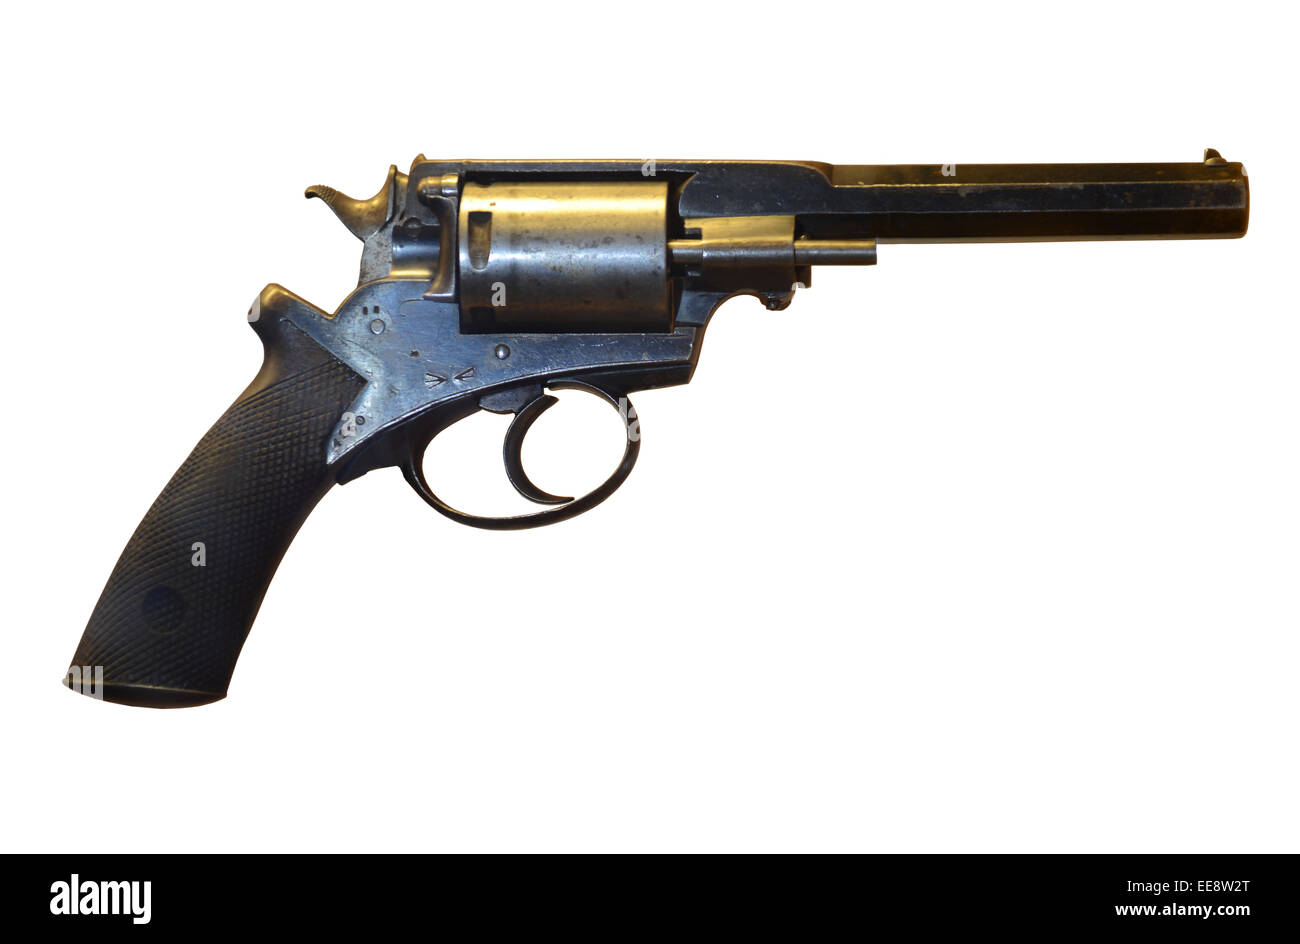 Adams Mark II revolver pistola, pistola su sfondo bianco Foto Stock